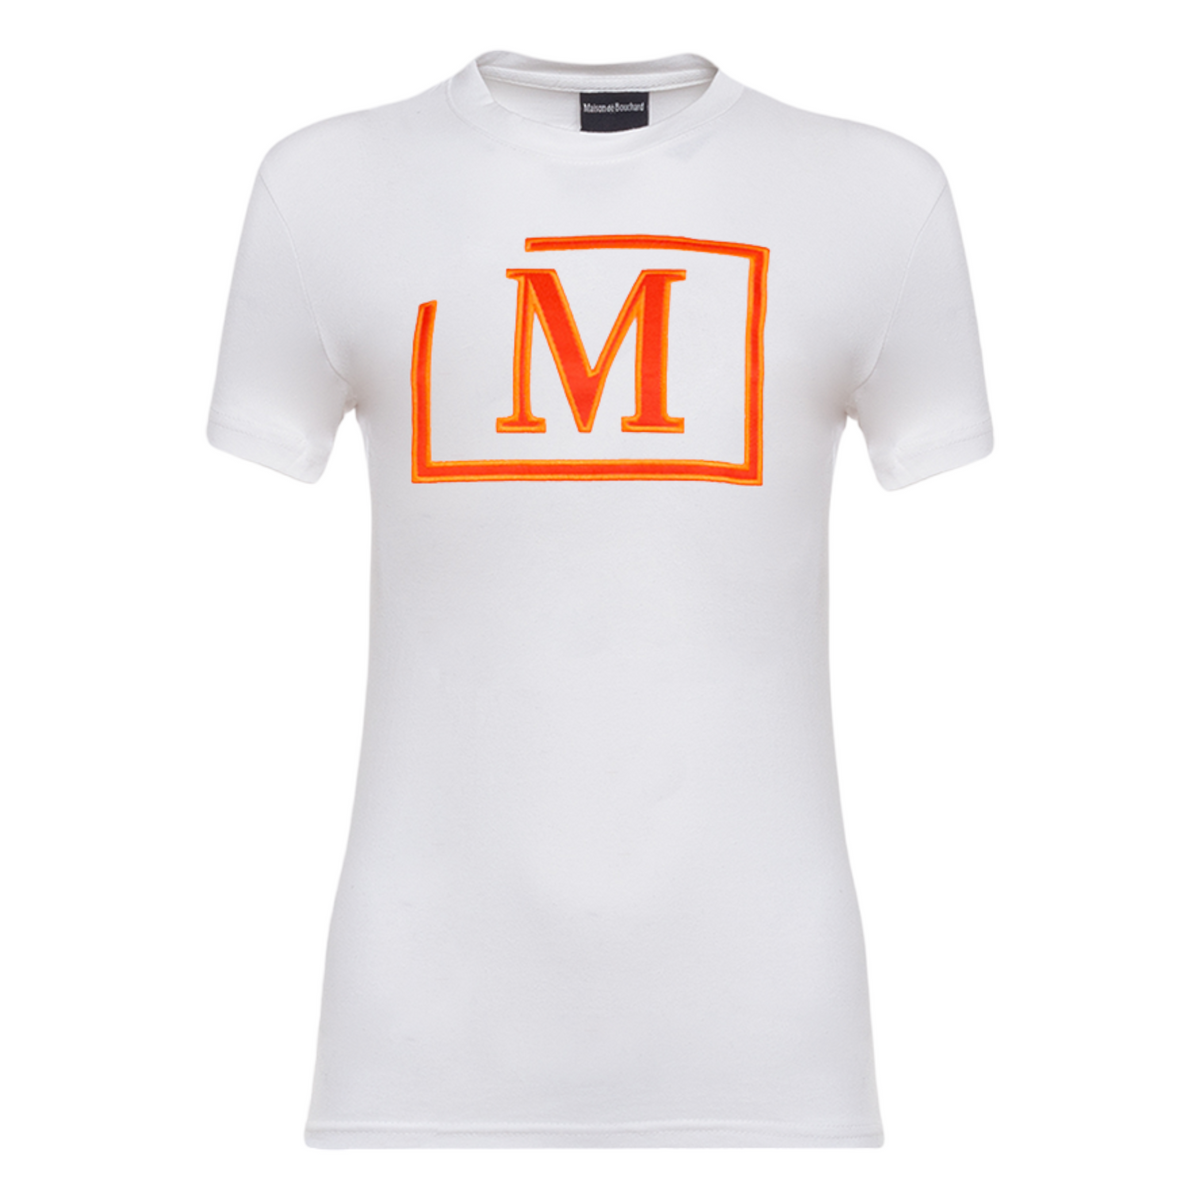 MDB Brand Women's Classic M Embroidered Logo Tee - White w/ Bright Logo